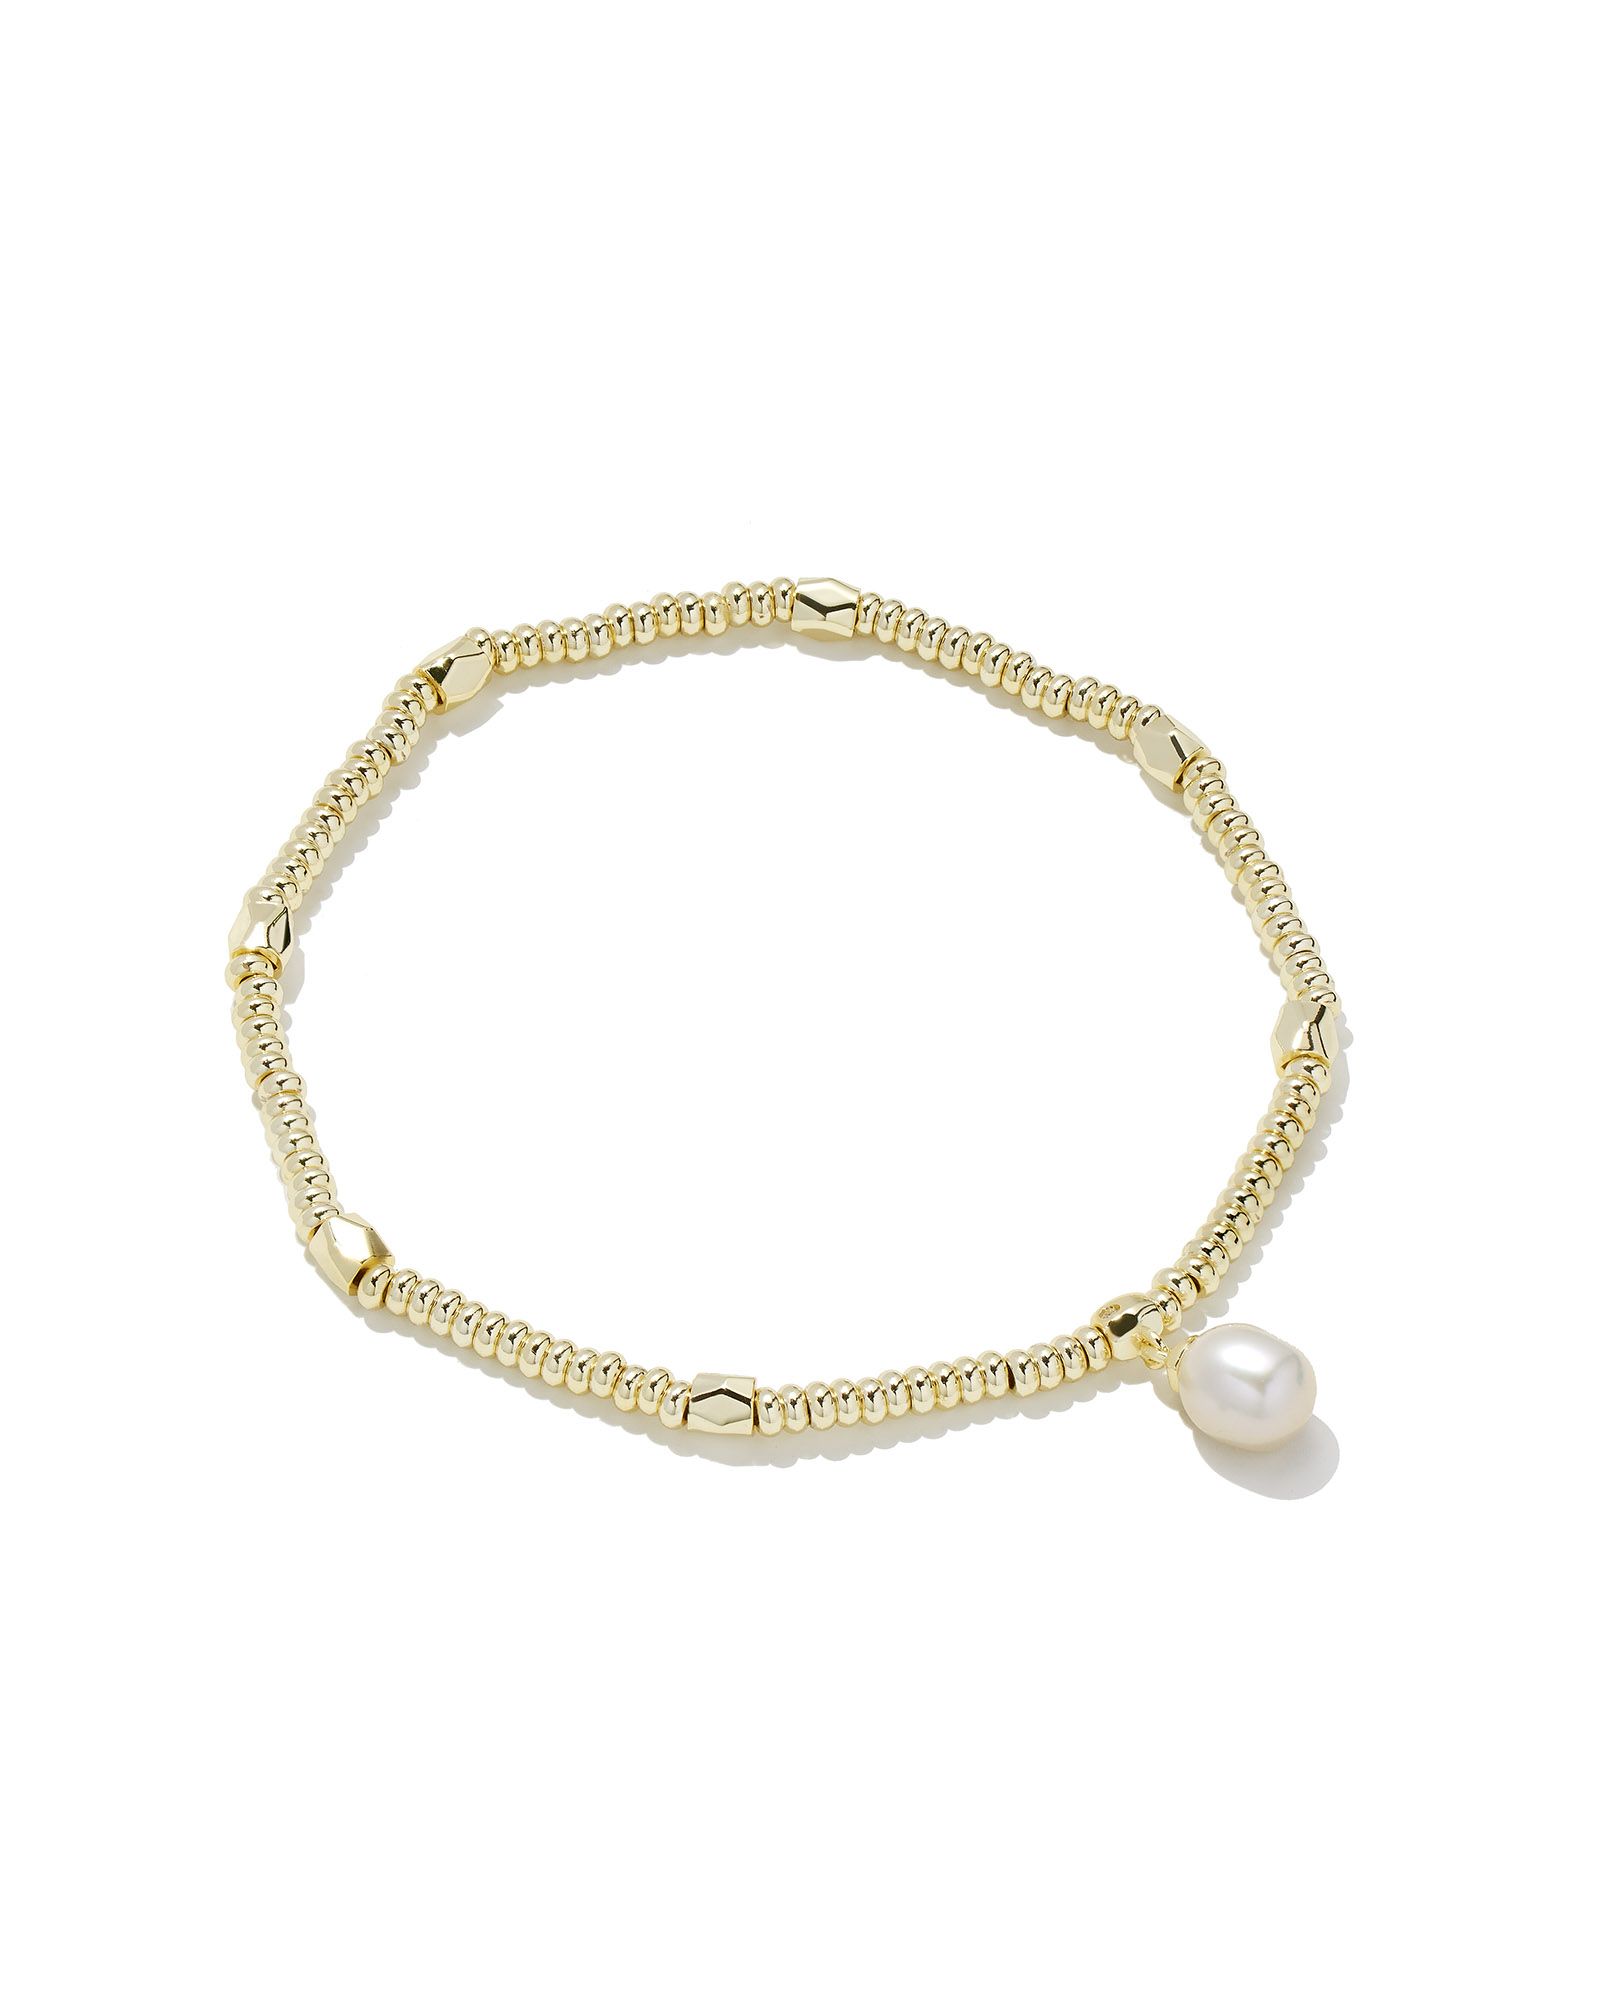 Lindsay Gold Stretch Bracelet in White Pearl | Kendra Scott